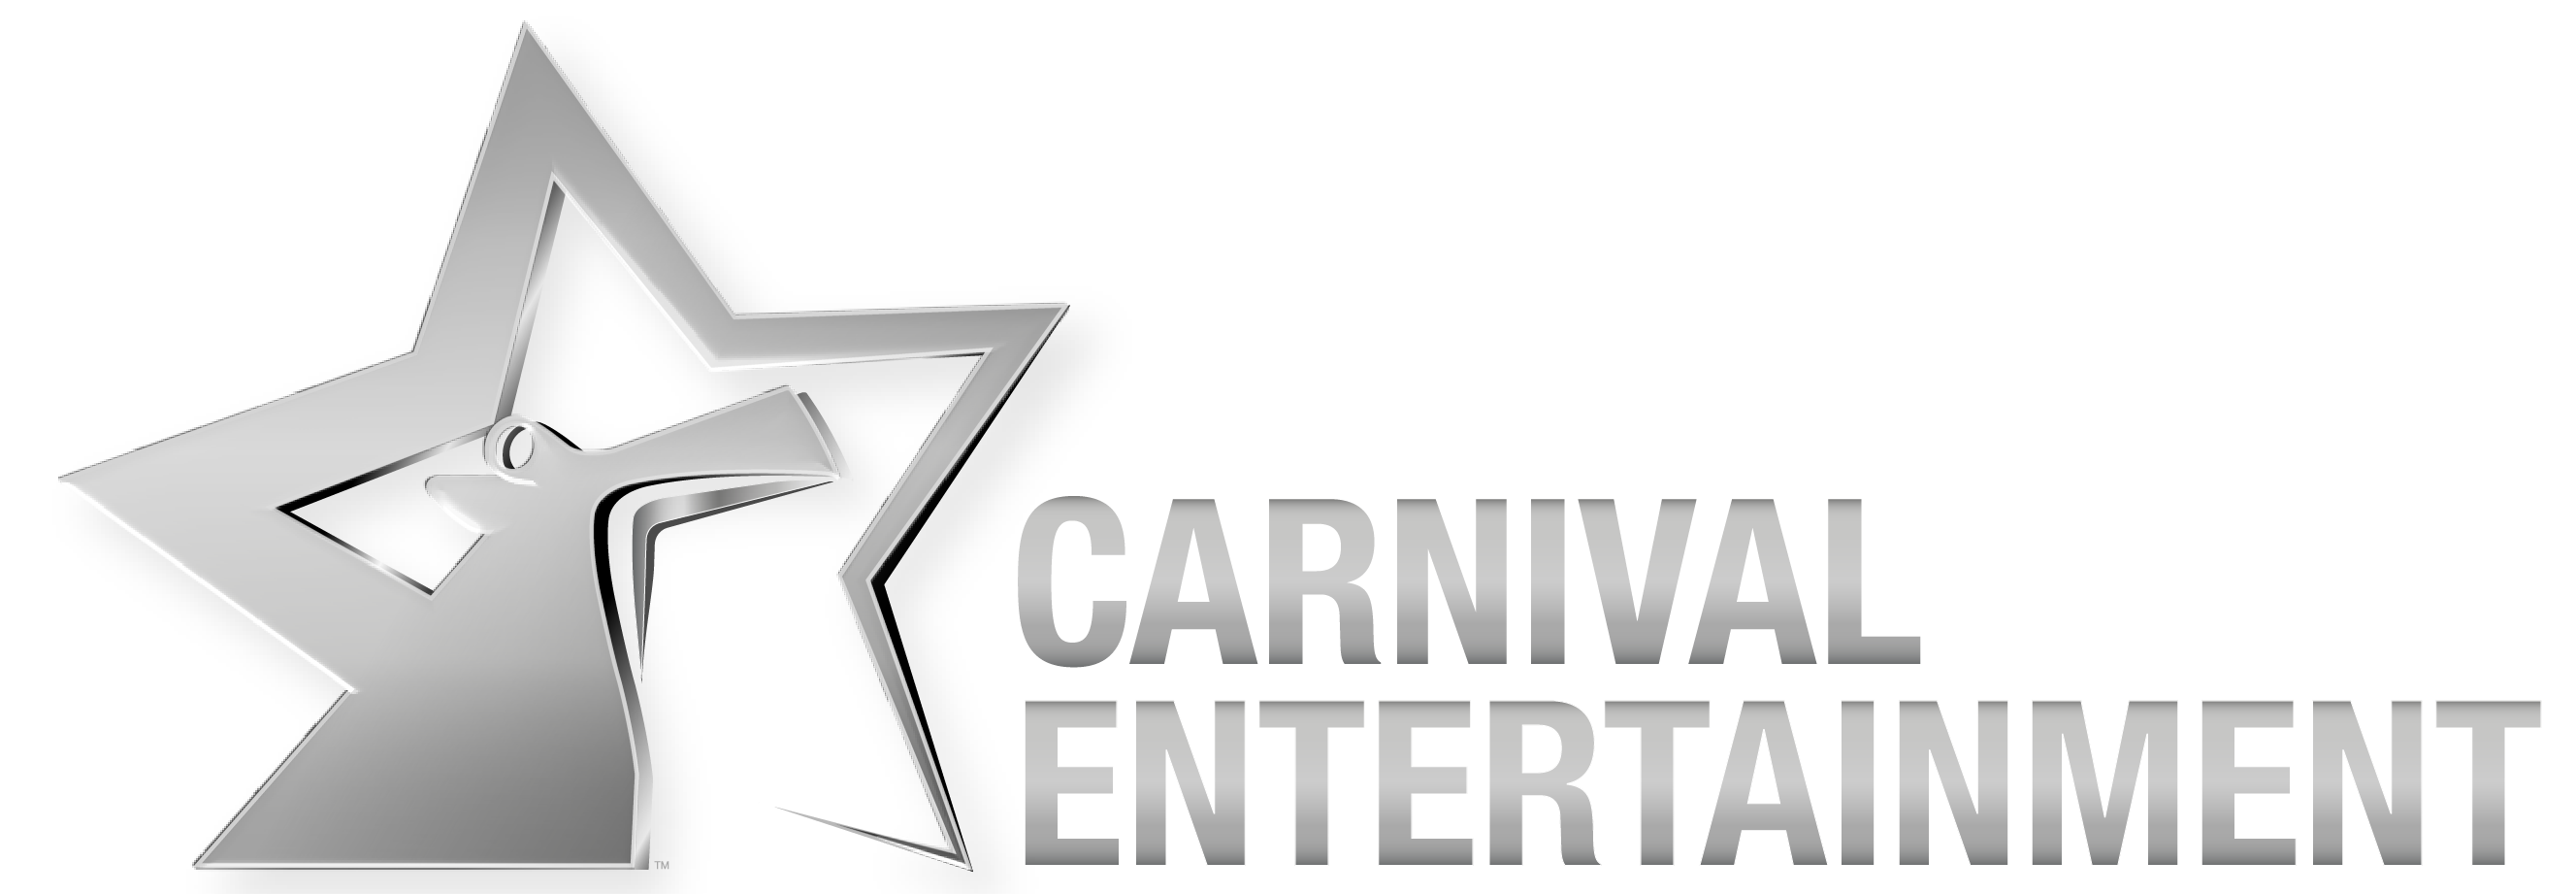 carnival cruise line rose